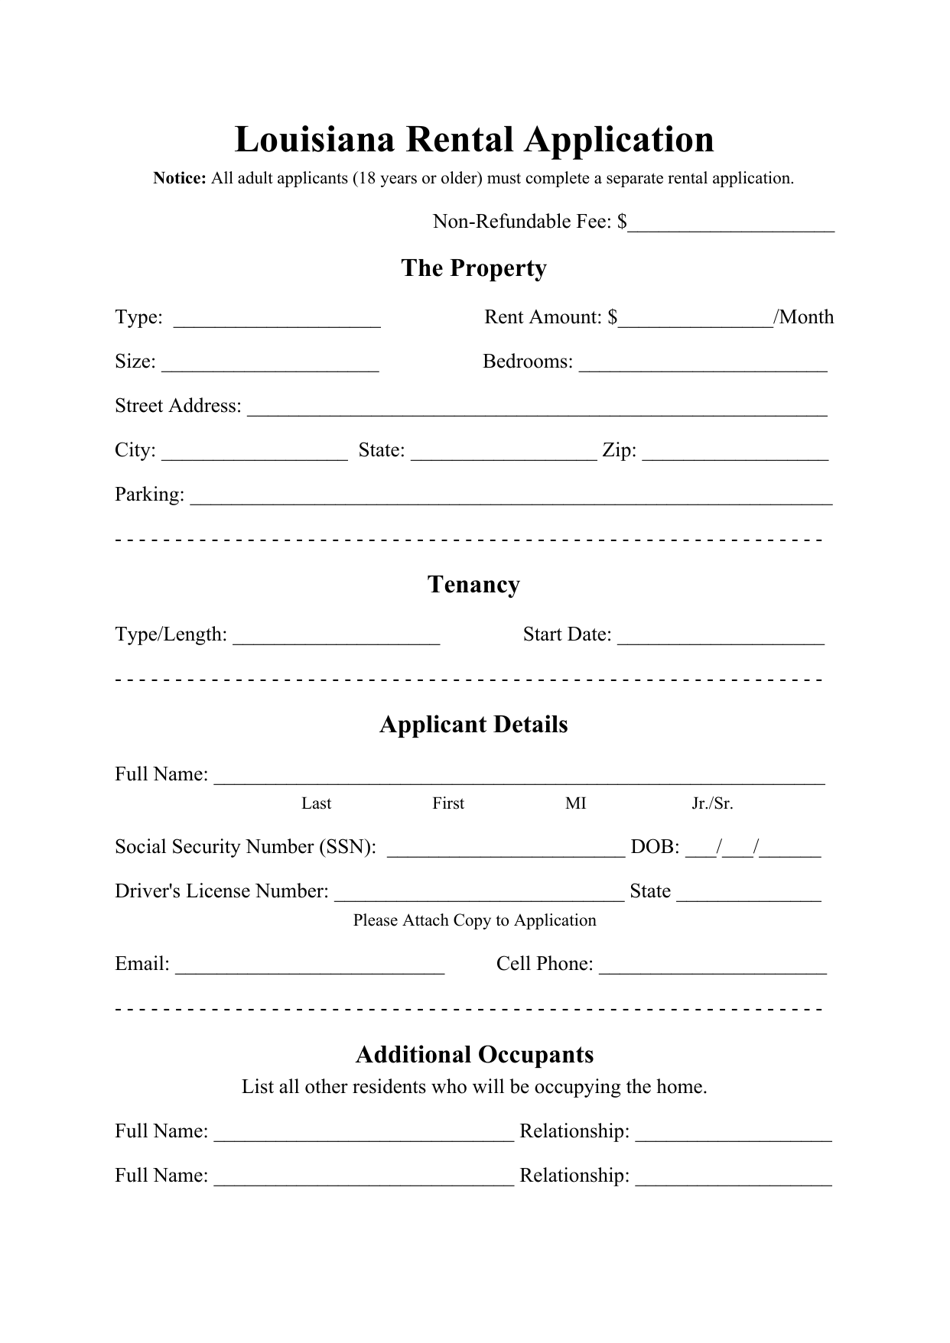 Rental Application Form - Louisiana, Page 1